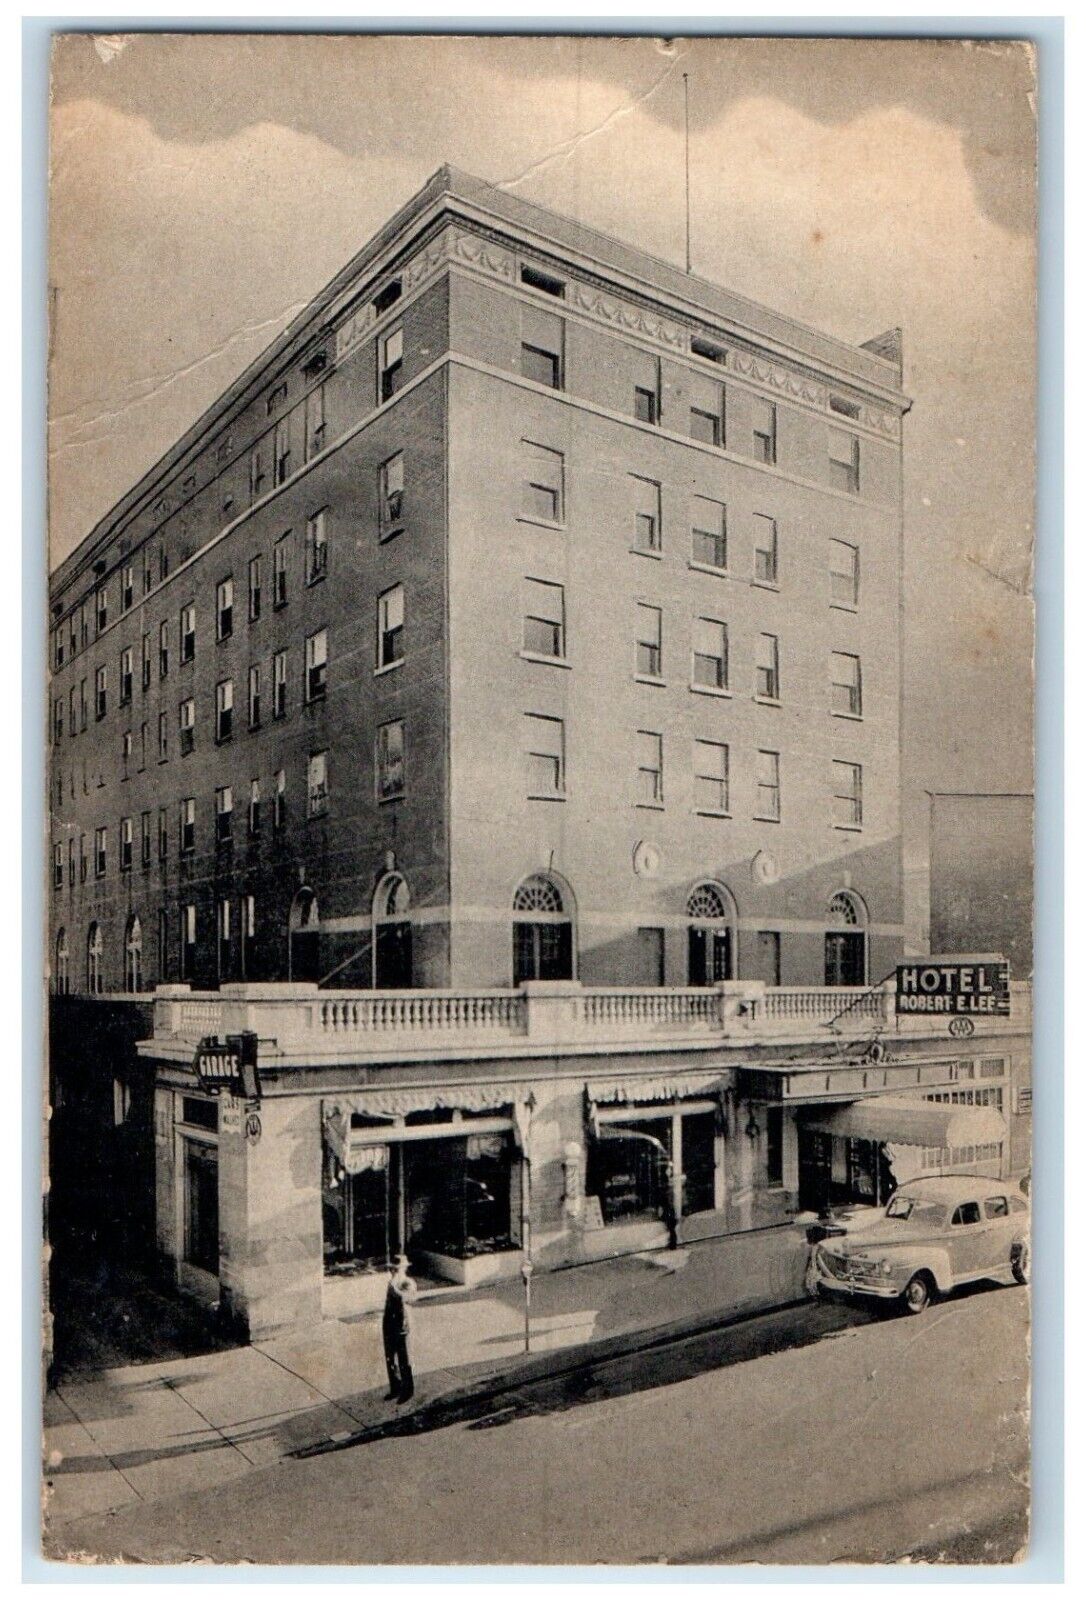 1948 Roadside View Robert Lee Hotel Building Lexington Virginia Vintage Postcard